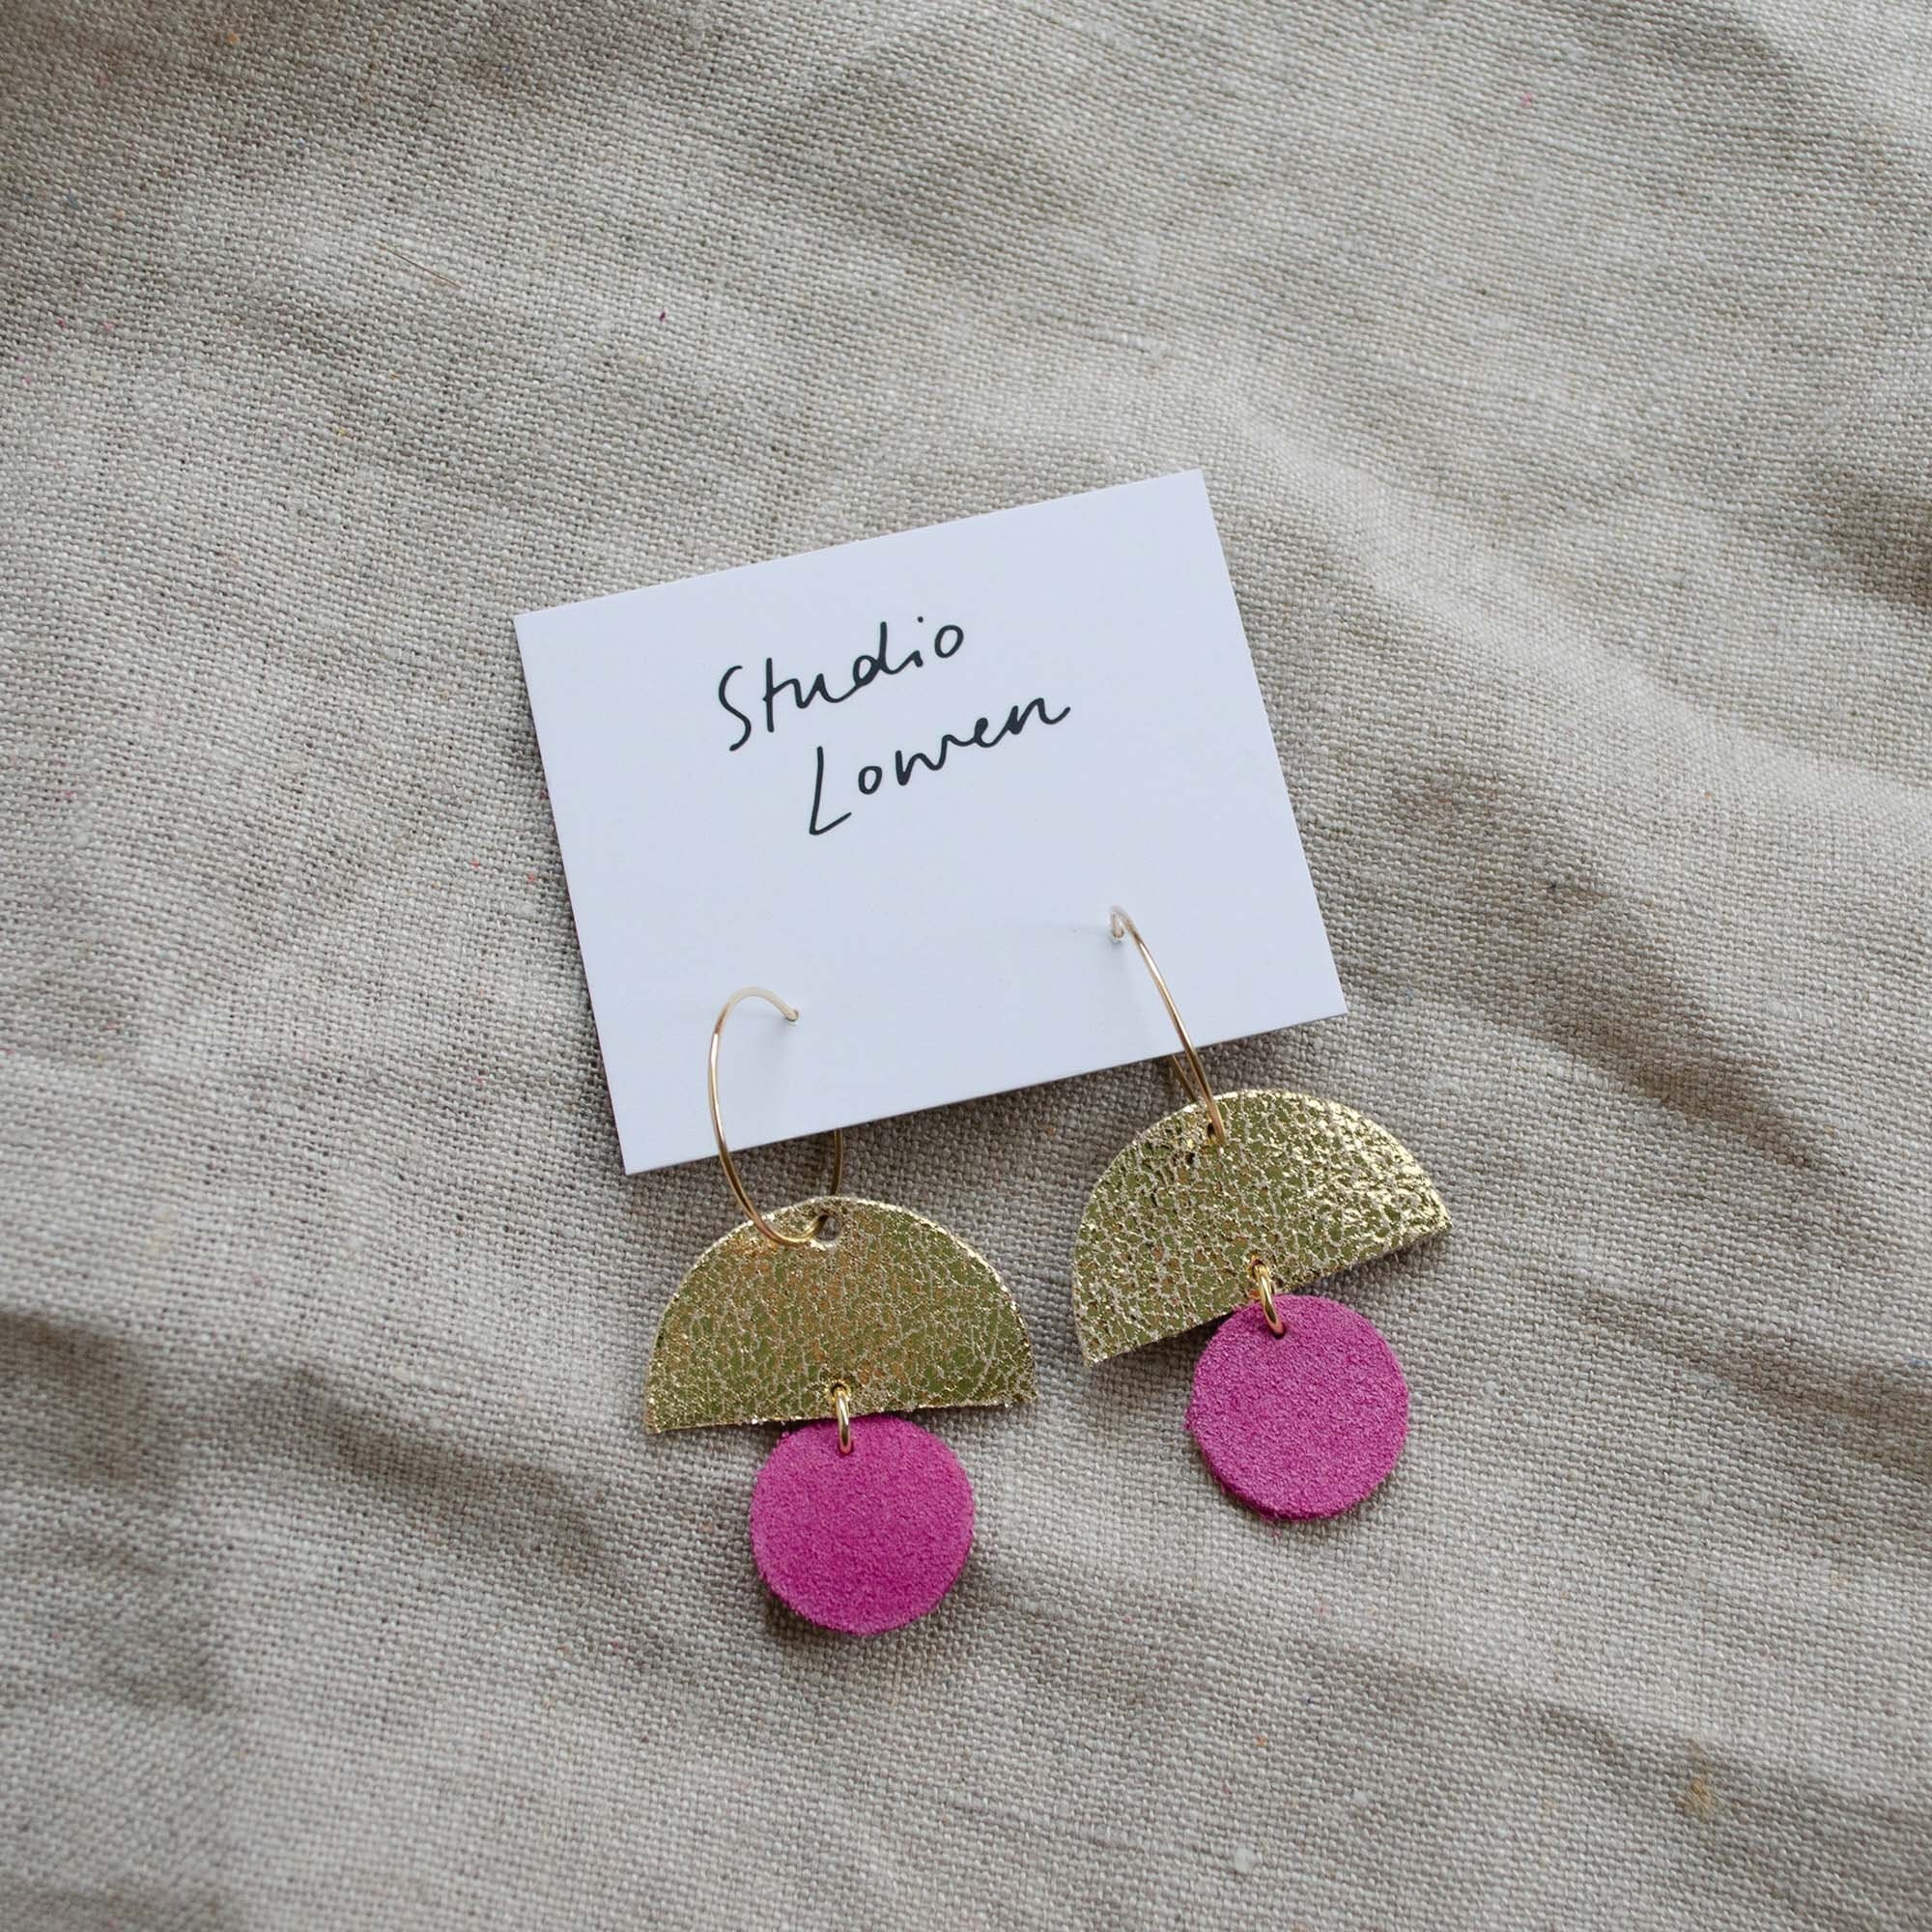 Sunrise Hoop Earrings Made From Recycled Leather. Lightweight Statement Earrings in A Minimalist, Geometric Style. Love Pink Earrings